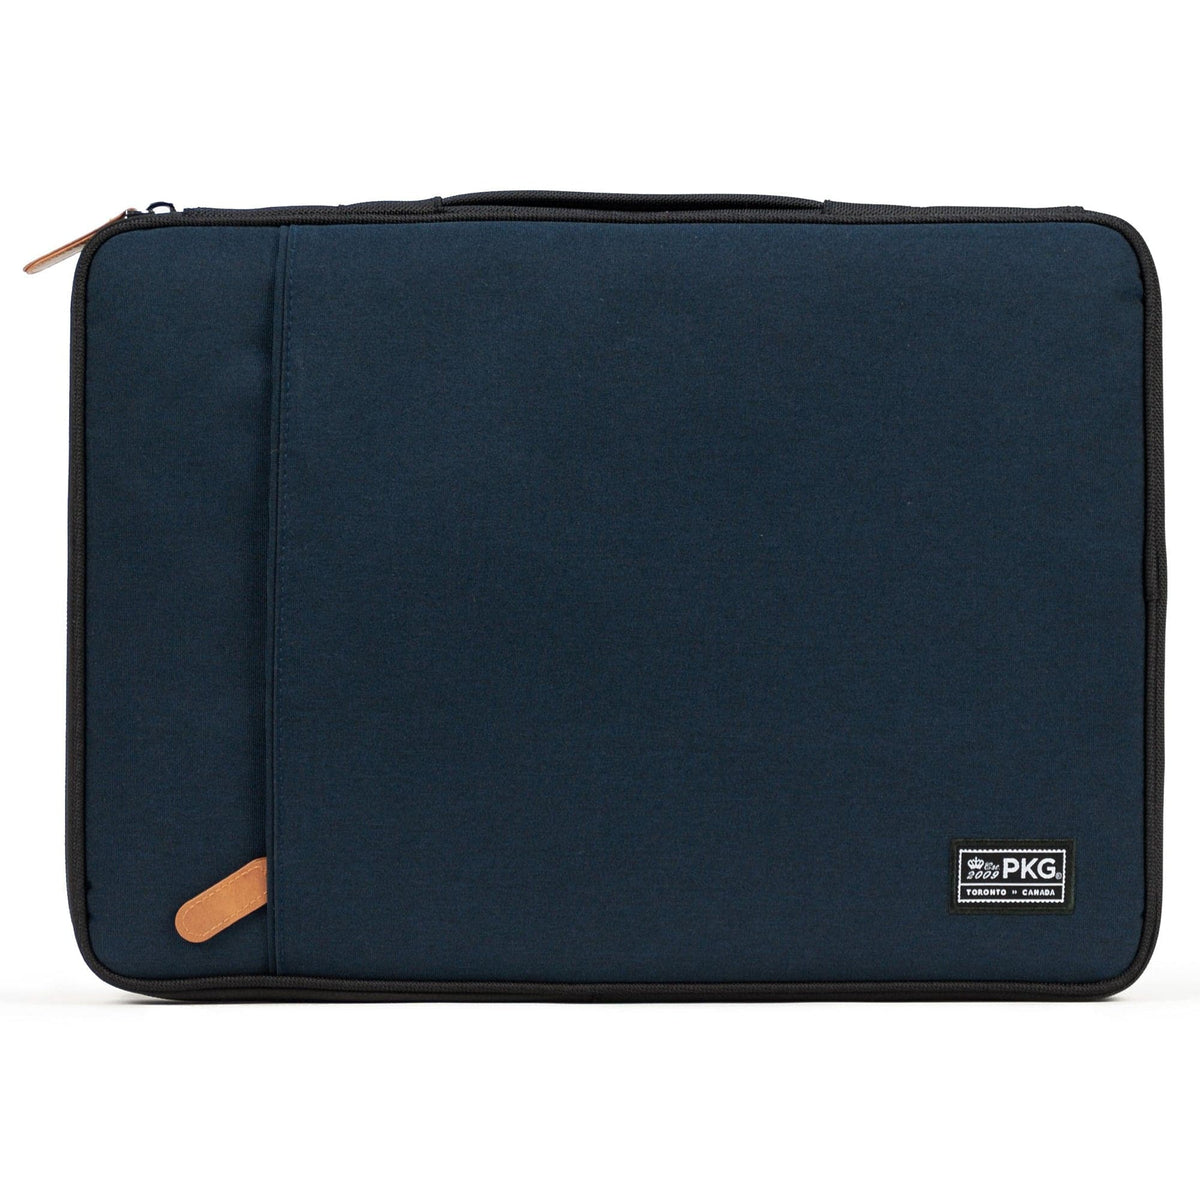 PKG Stuff 15"-16" Laptop Sleeve Bag